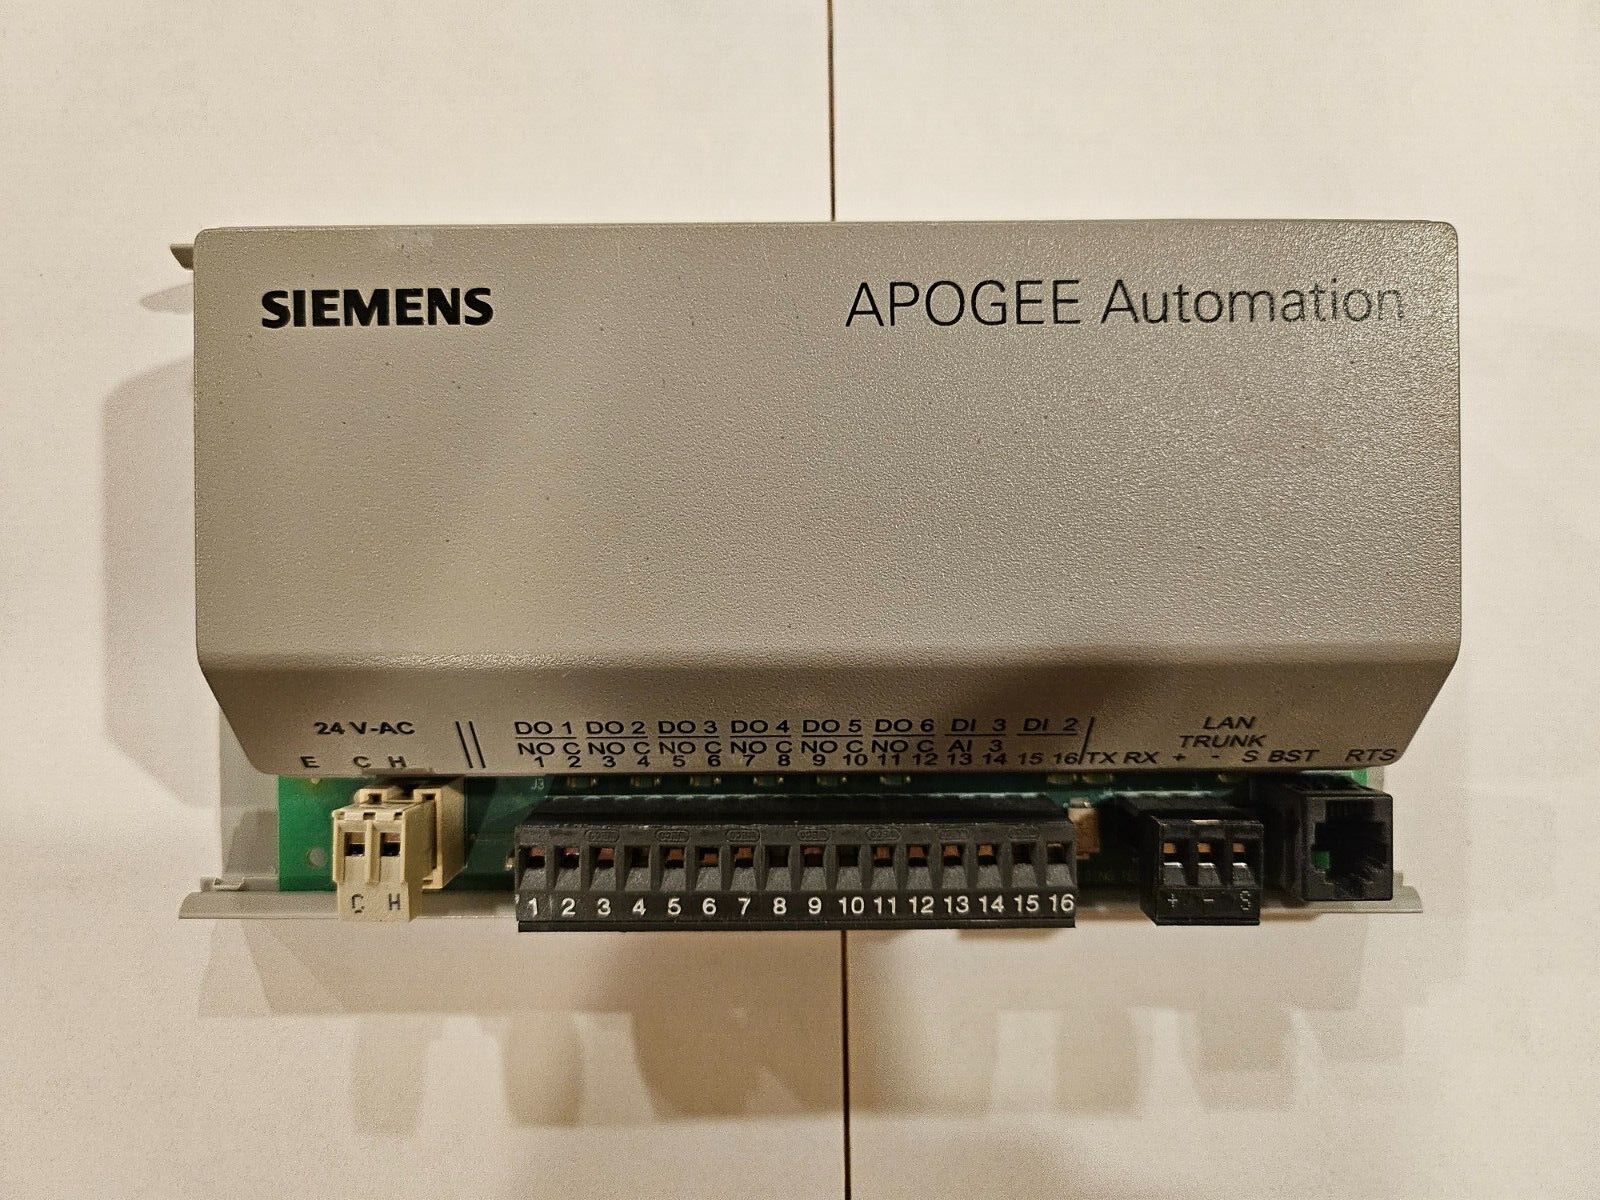 Siemens Apogee Terminal Equipment Controller (540-110)